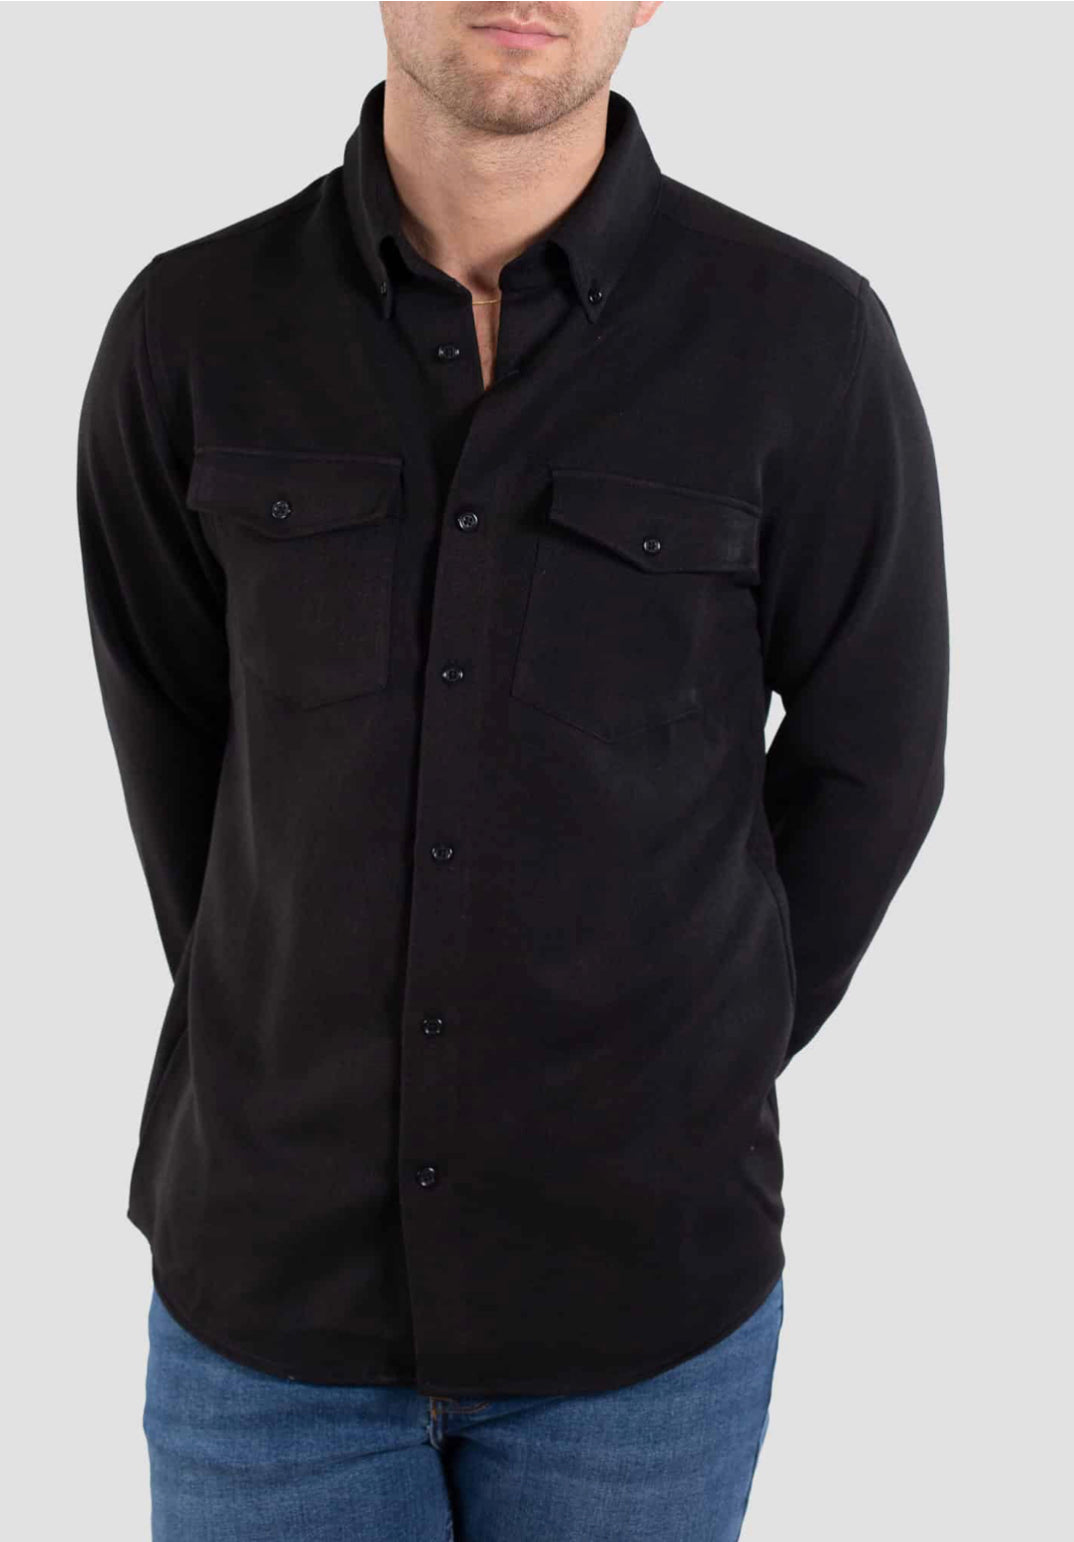 Ciszere Redy perfect shirt – All black